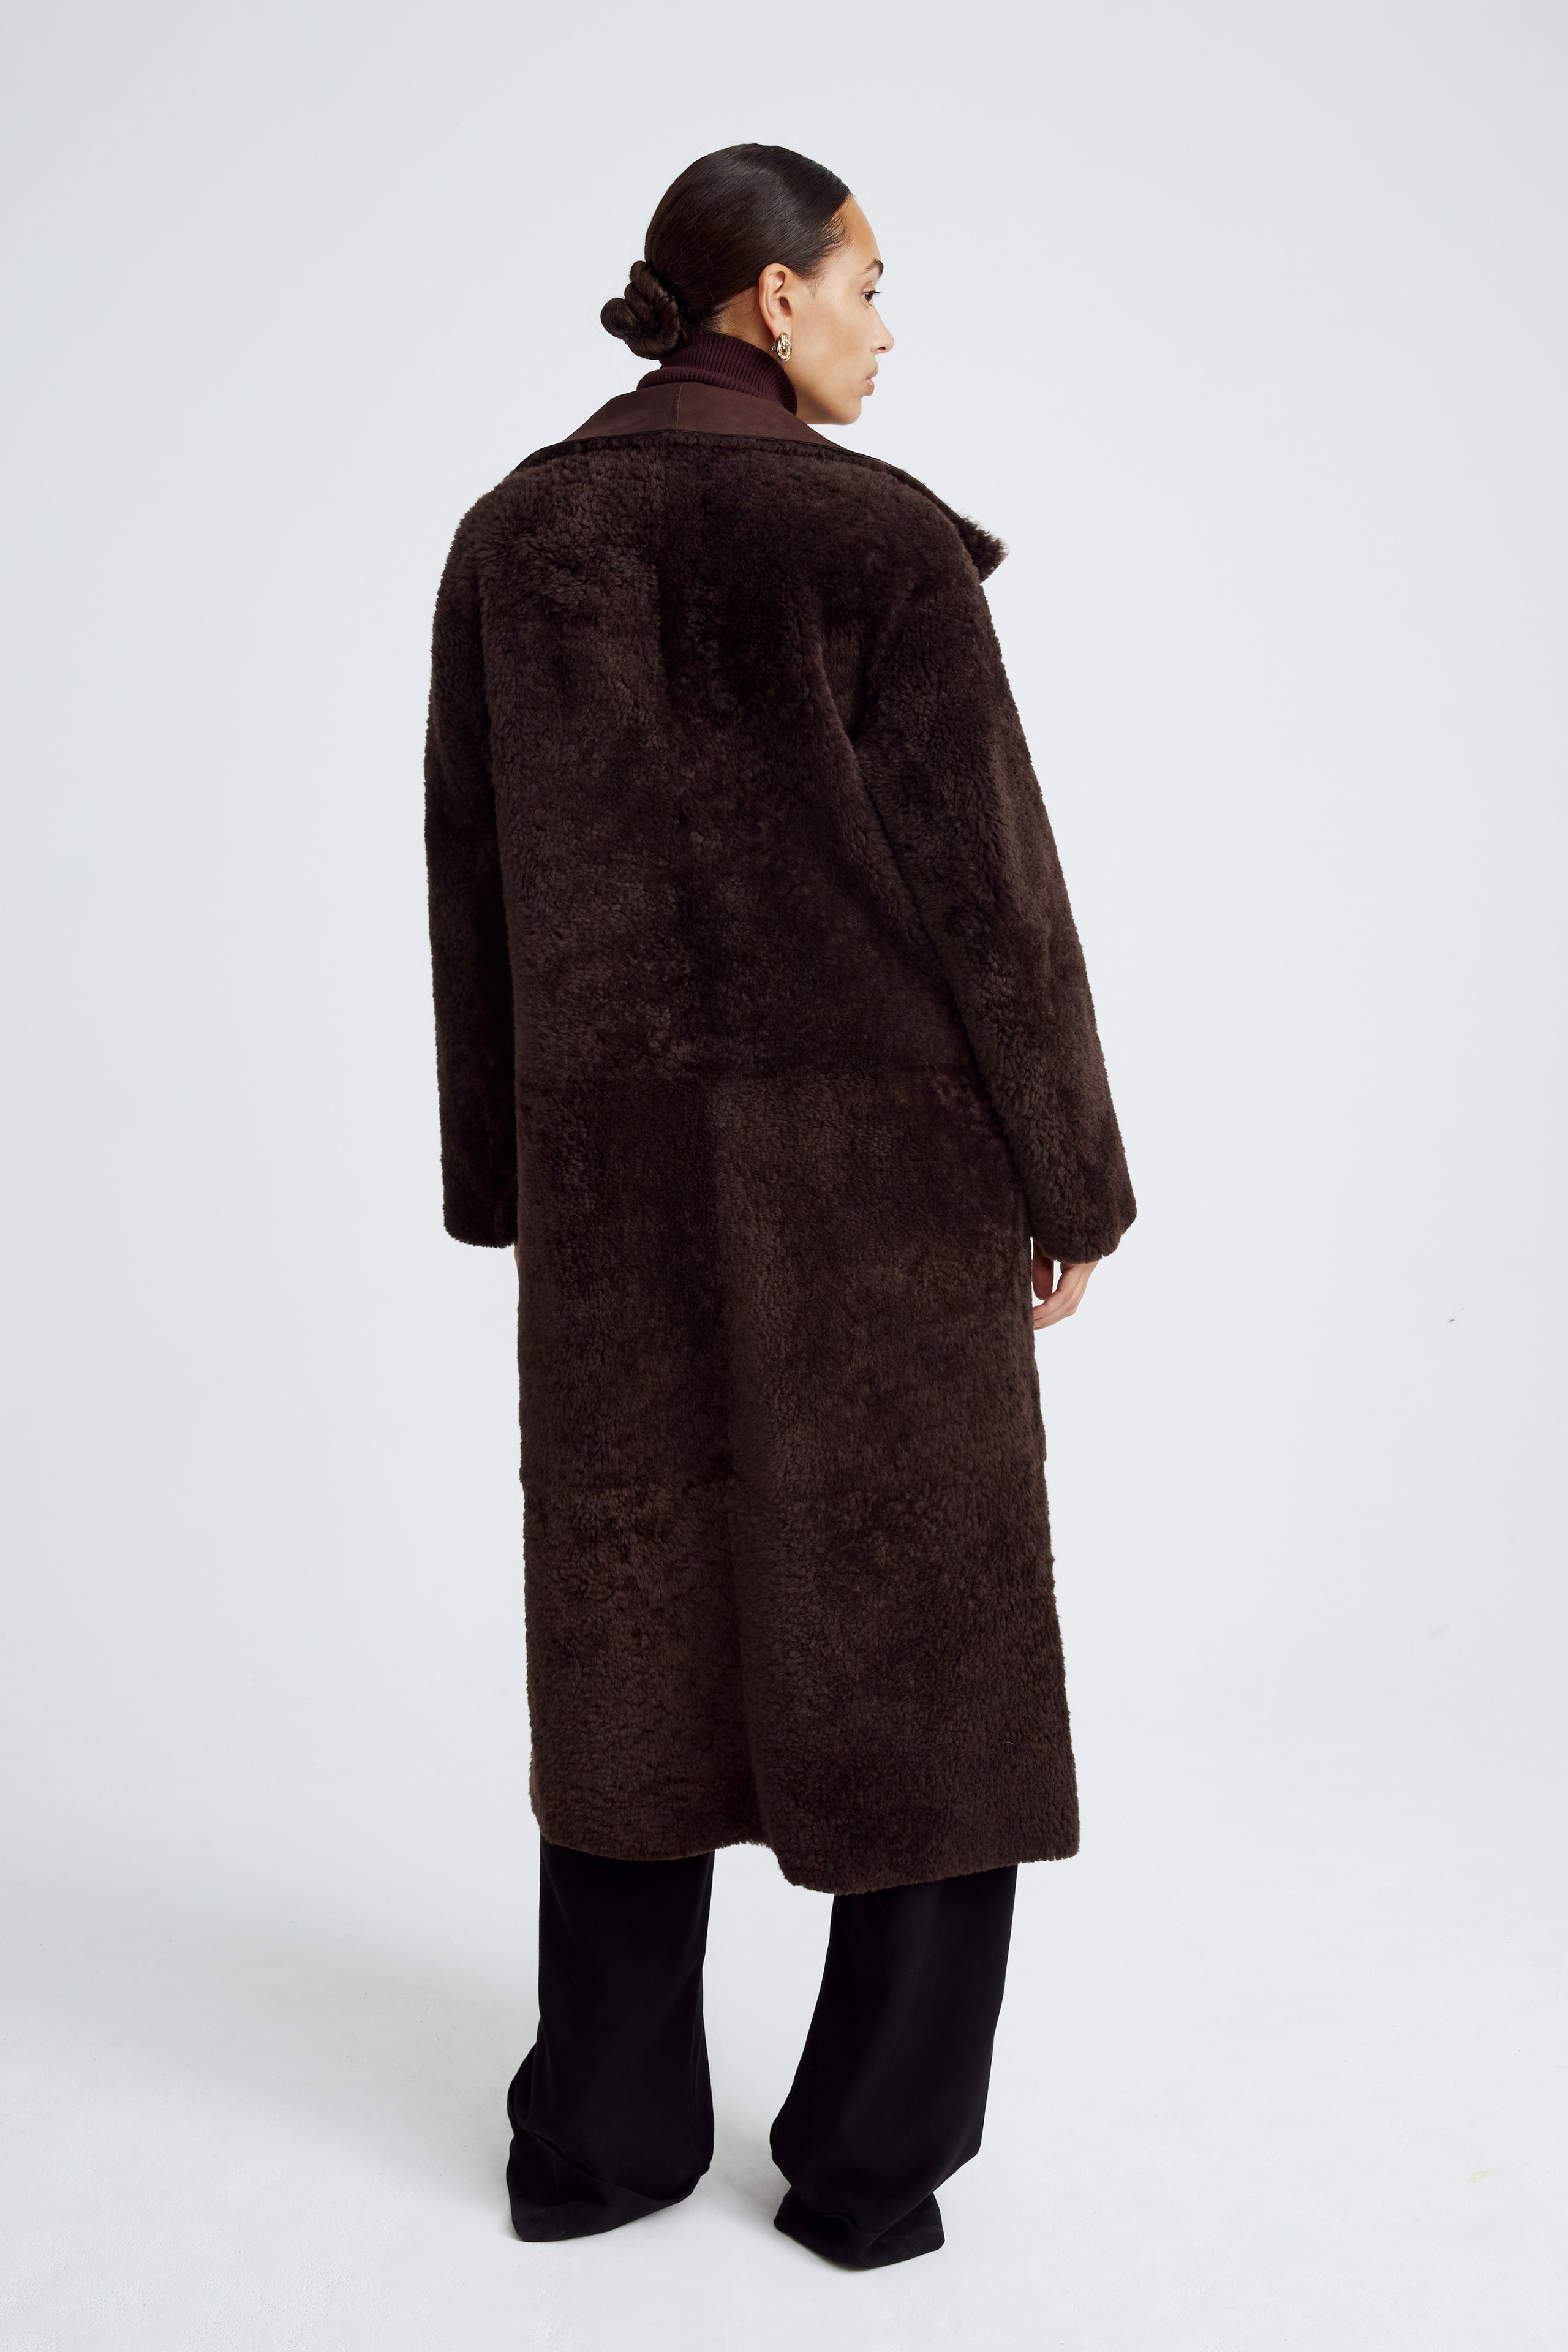 Model is wearing the Birthday Coat Dark Chocolate Draped Shearling Coat Back